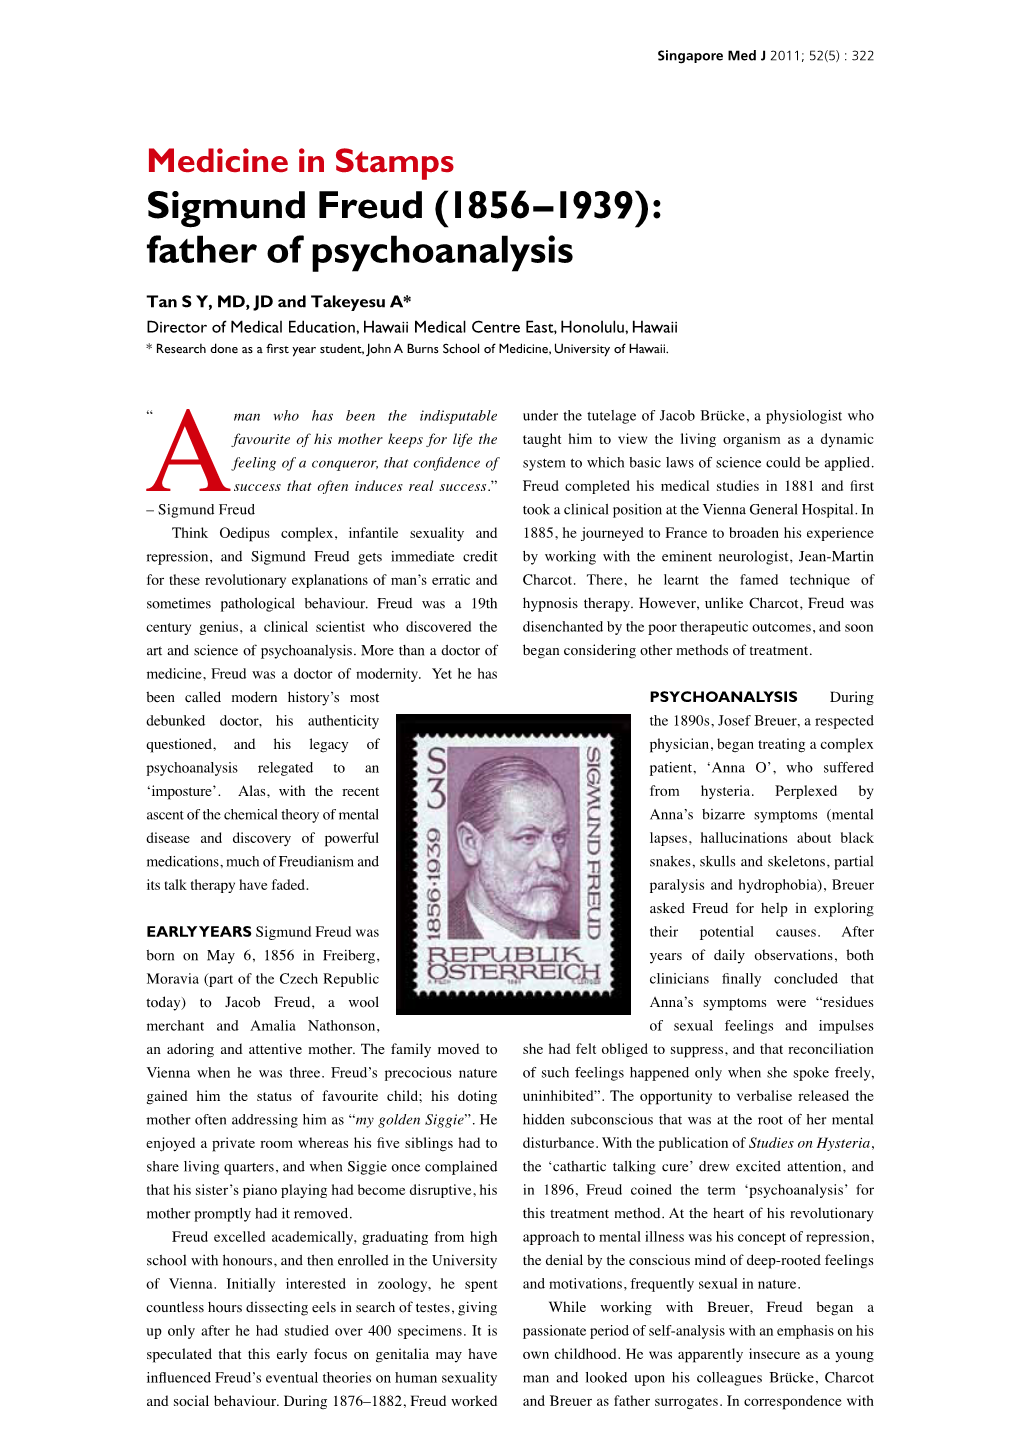 Sigmund Freud (1856–1939): Father of Psychoanalysis